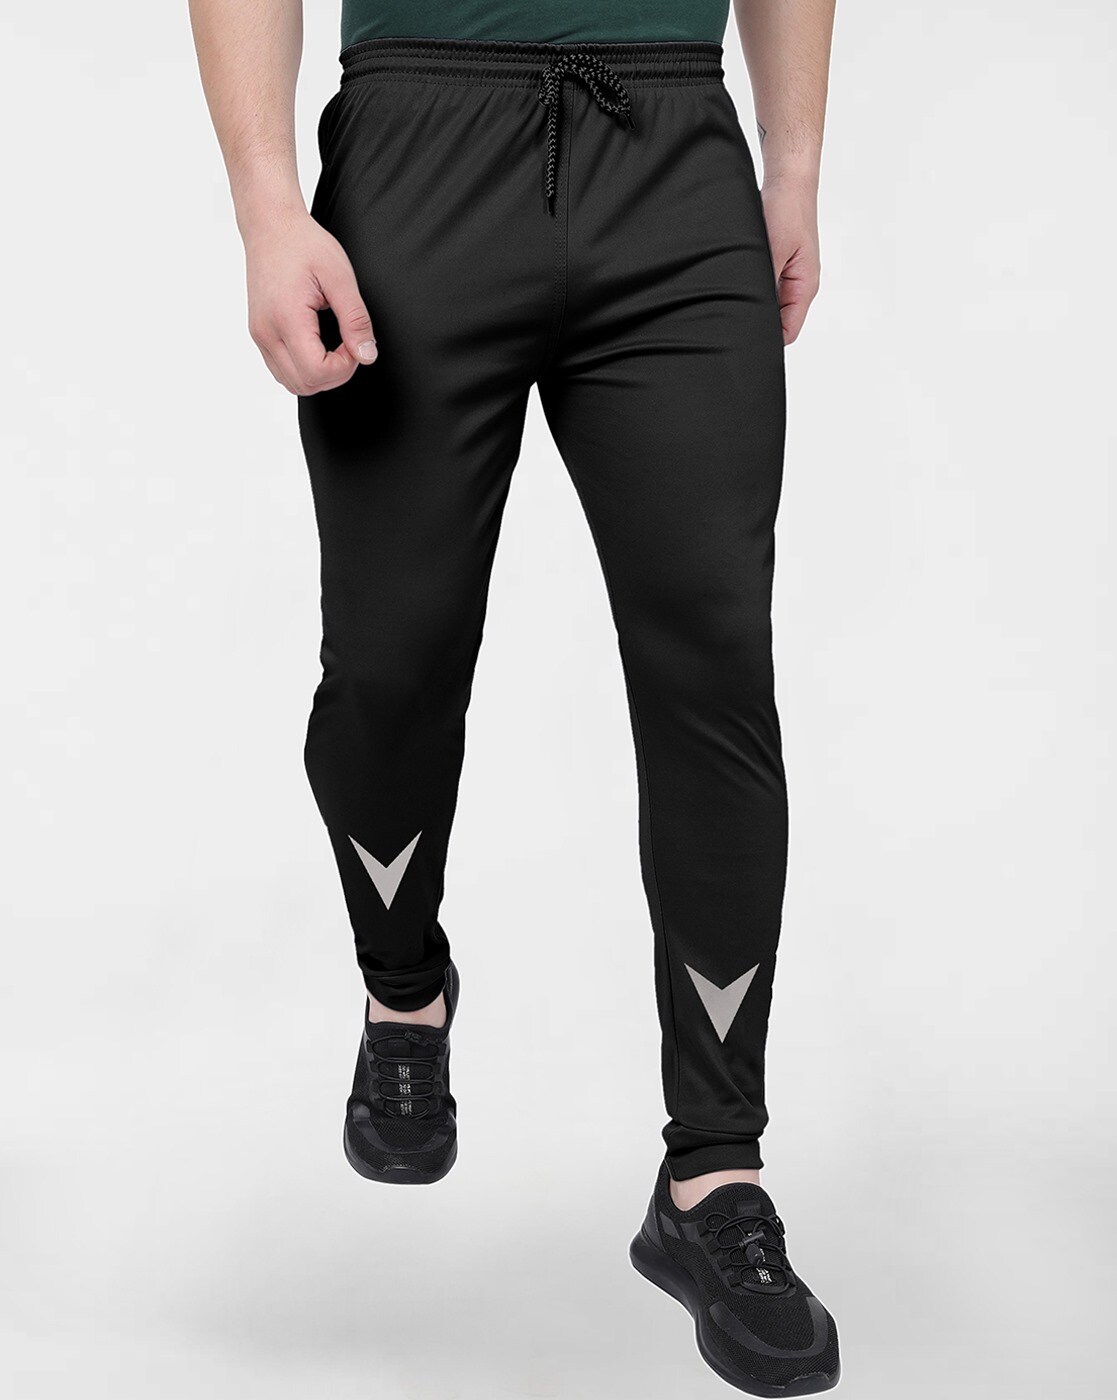 Buy Black Track Pants for Men by SELVIA Online